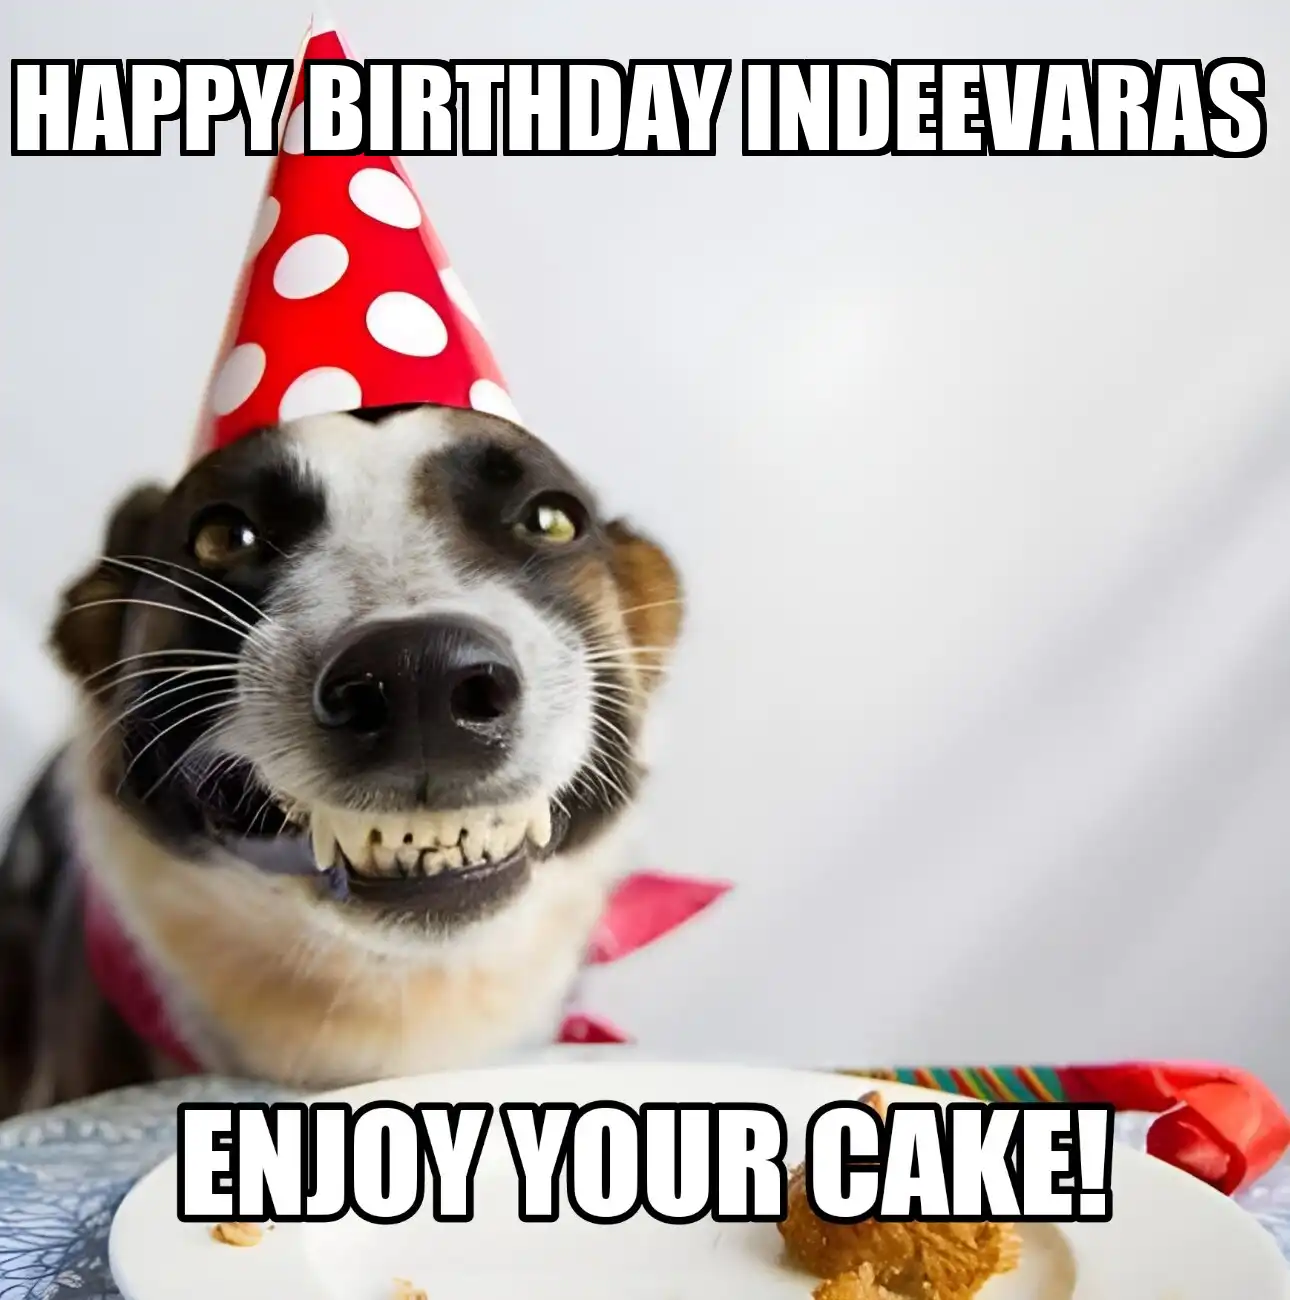 Happy Birthday Indeevaras Enjoy Your Cake Dog Meme